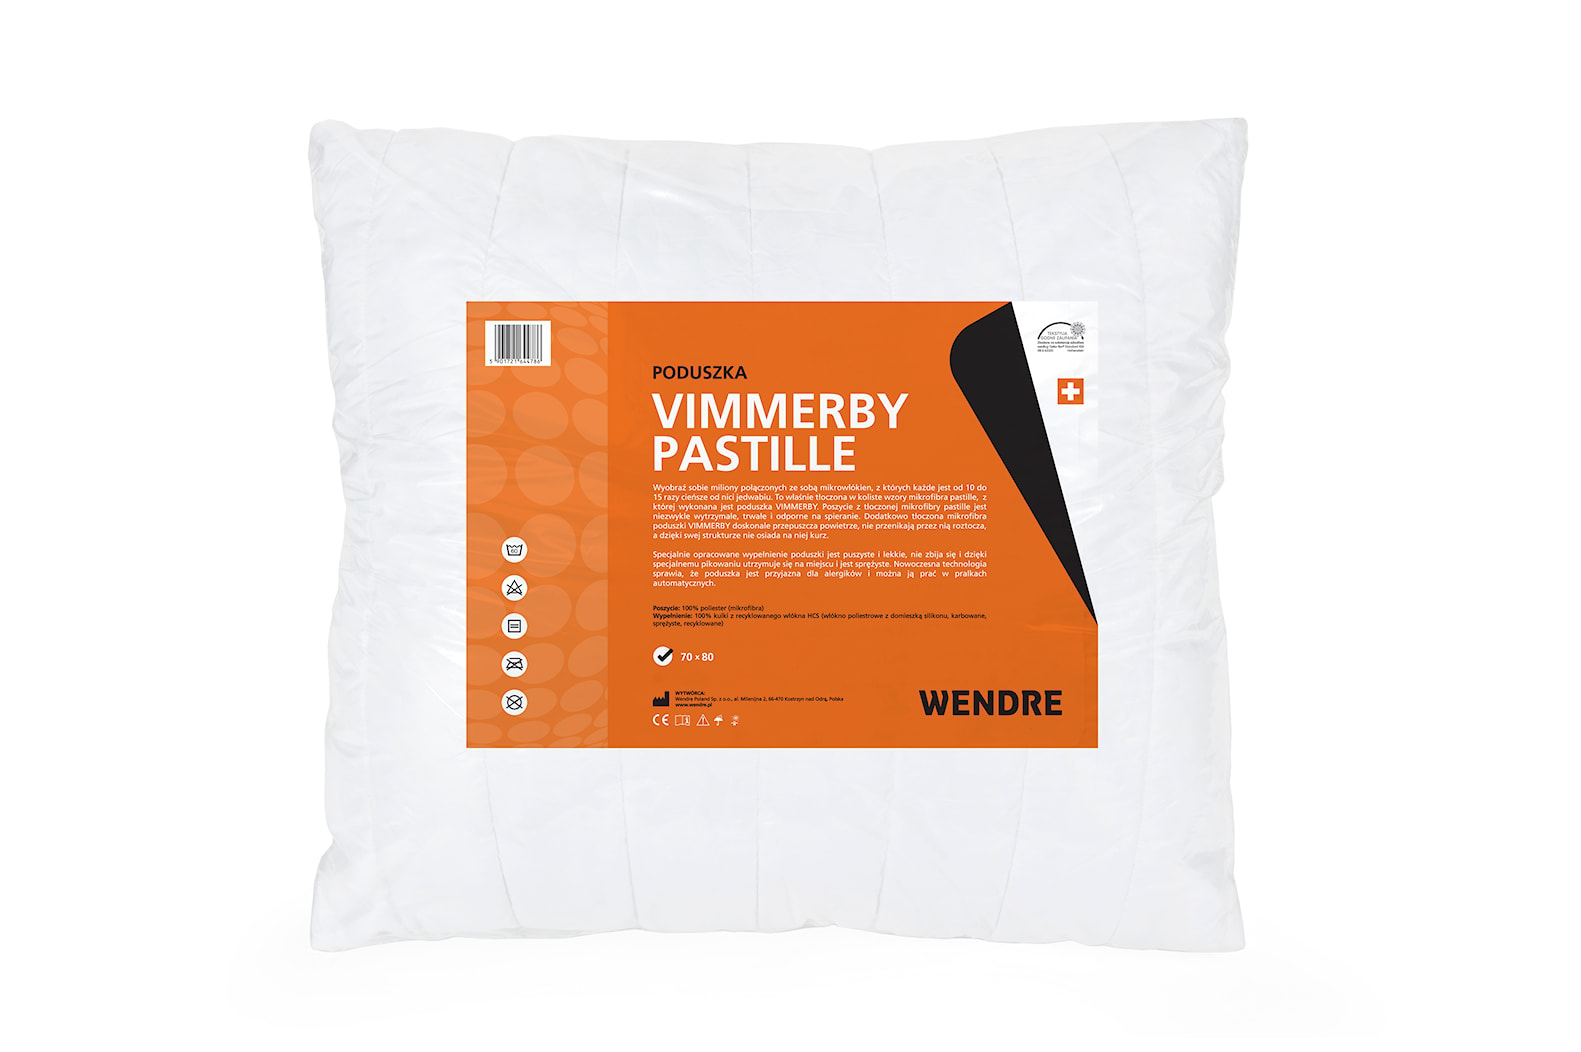 Poduszka Vimmerby Pastille Wendre - zdjęcie od WENDRE - Homebook